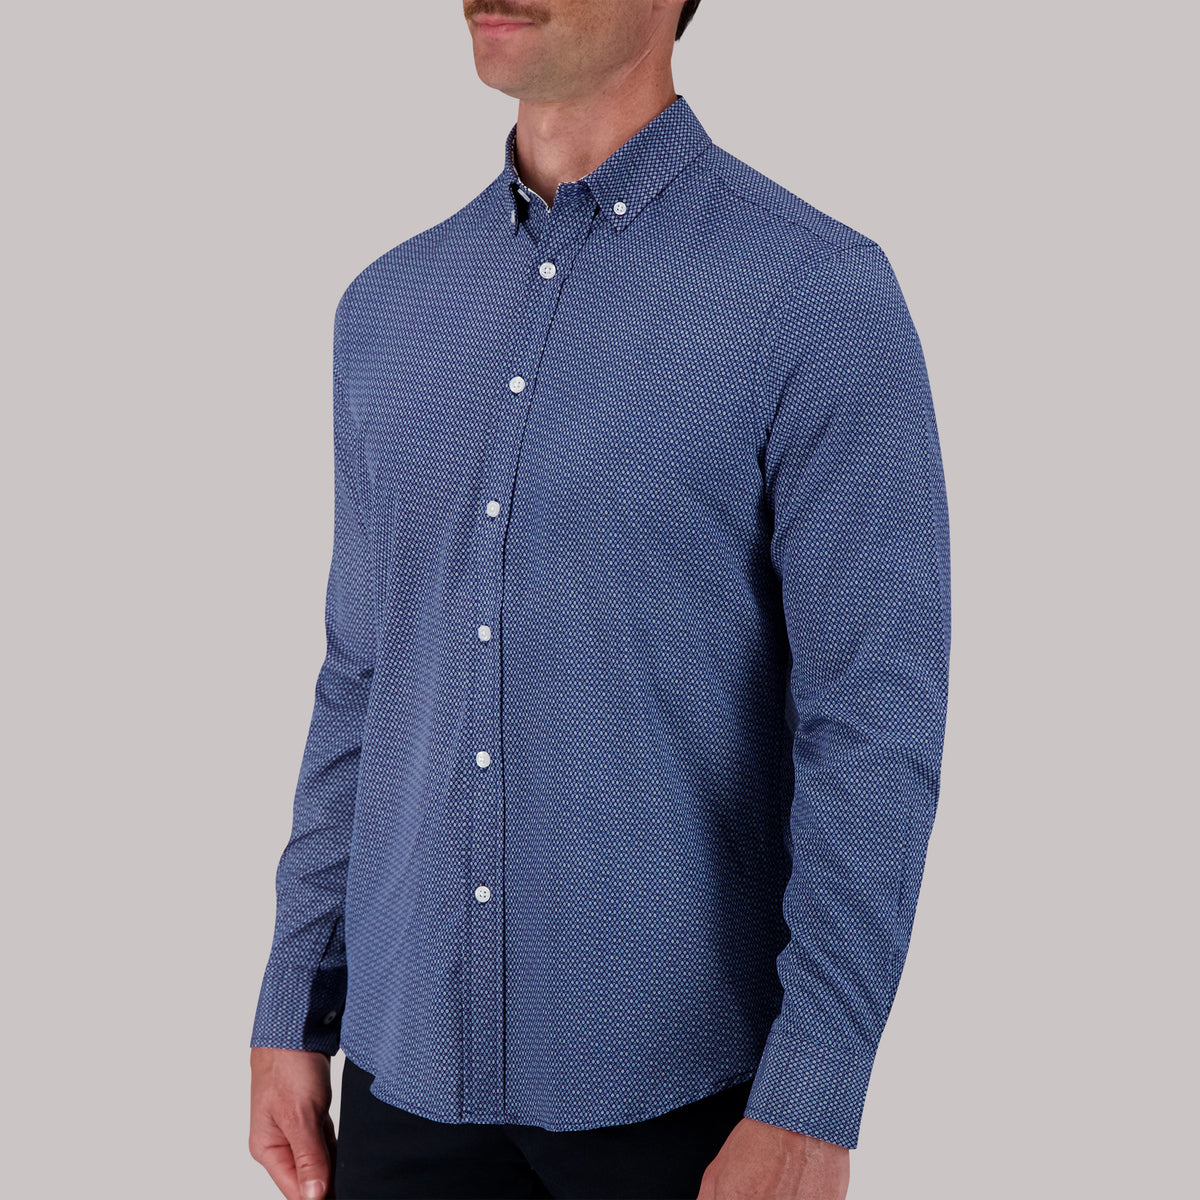 Long Sleeve 4 Way Geometric Print Sport Woven Shirt in Navy